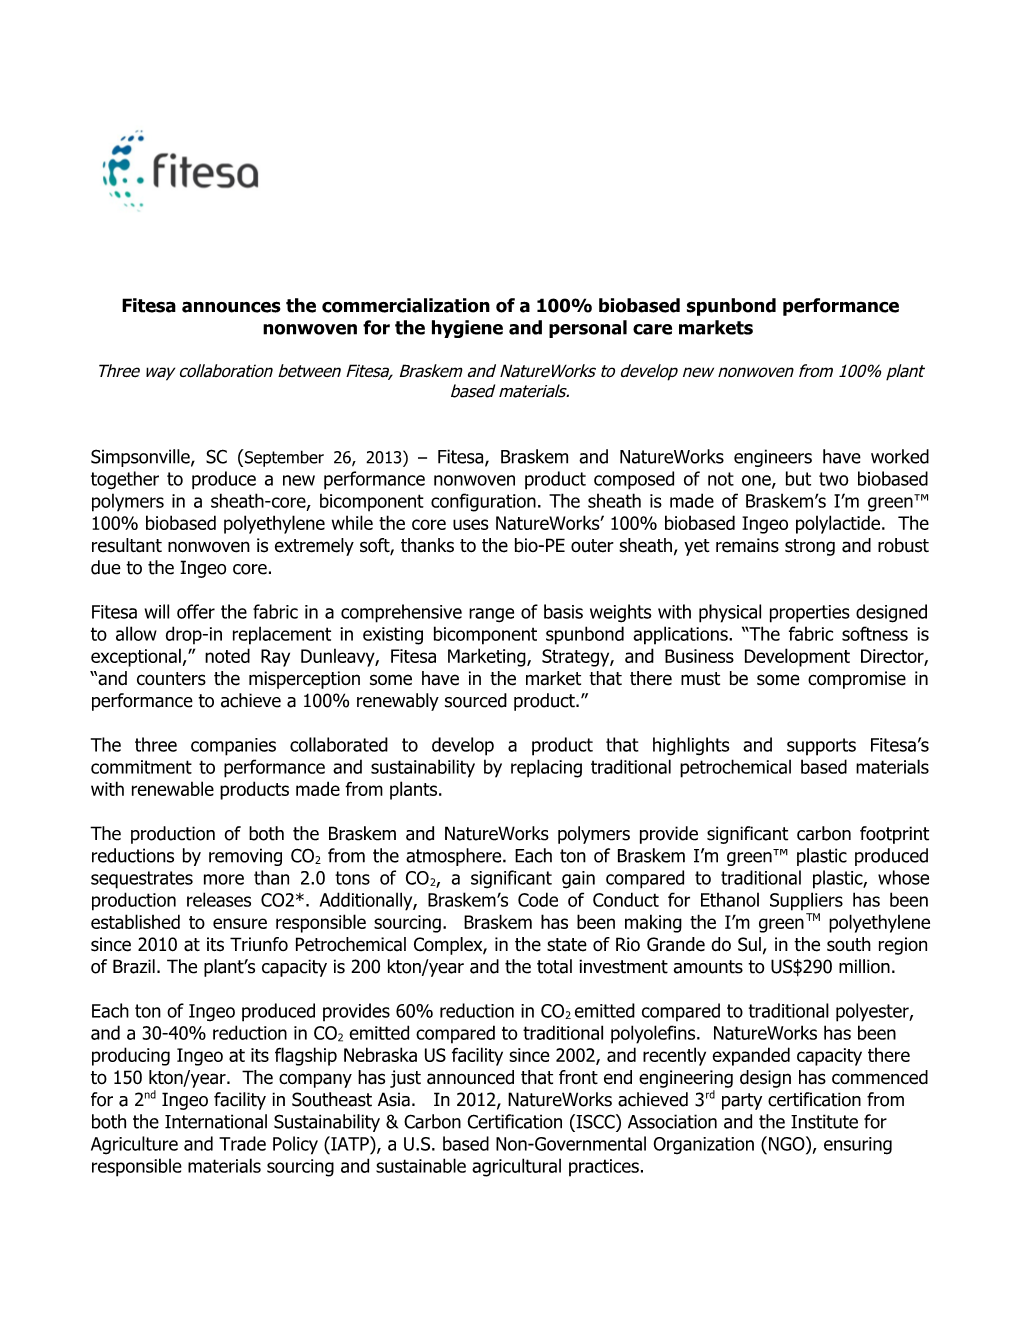 Fitesa Announces the Commercialization of a 100% Biobasedspunbondperformance Nonwoven